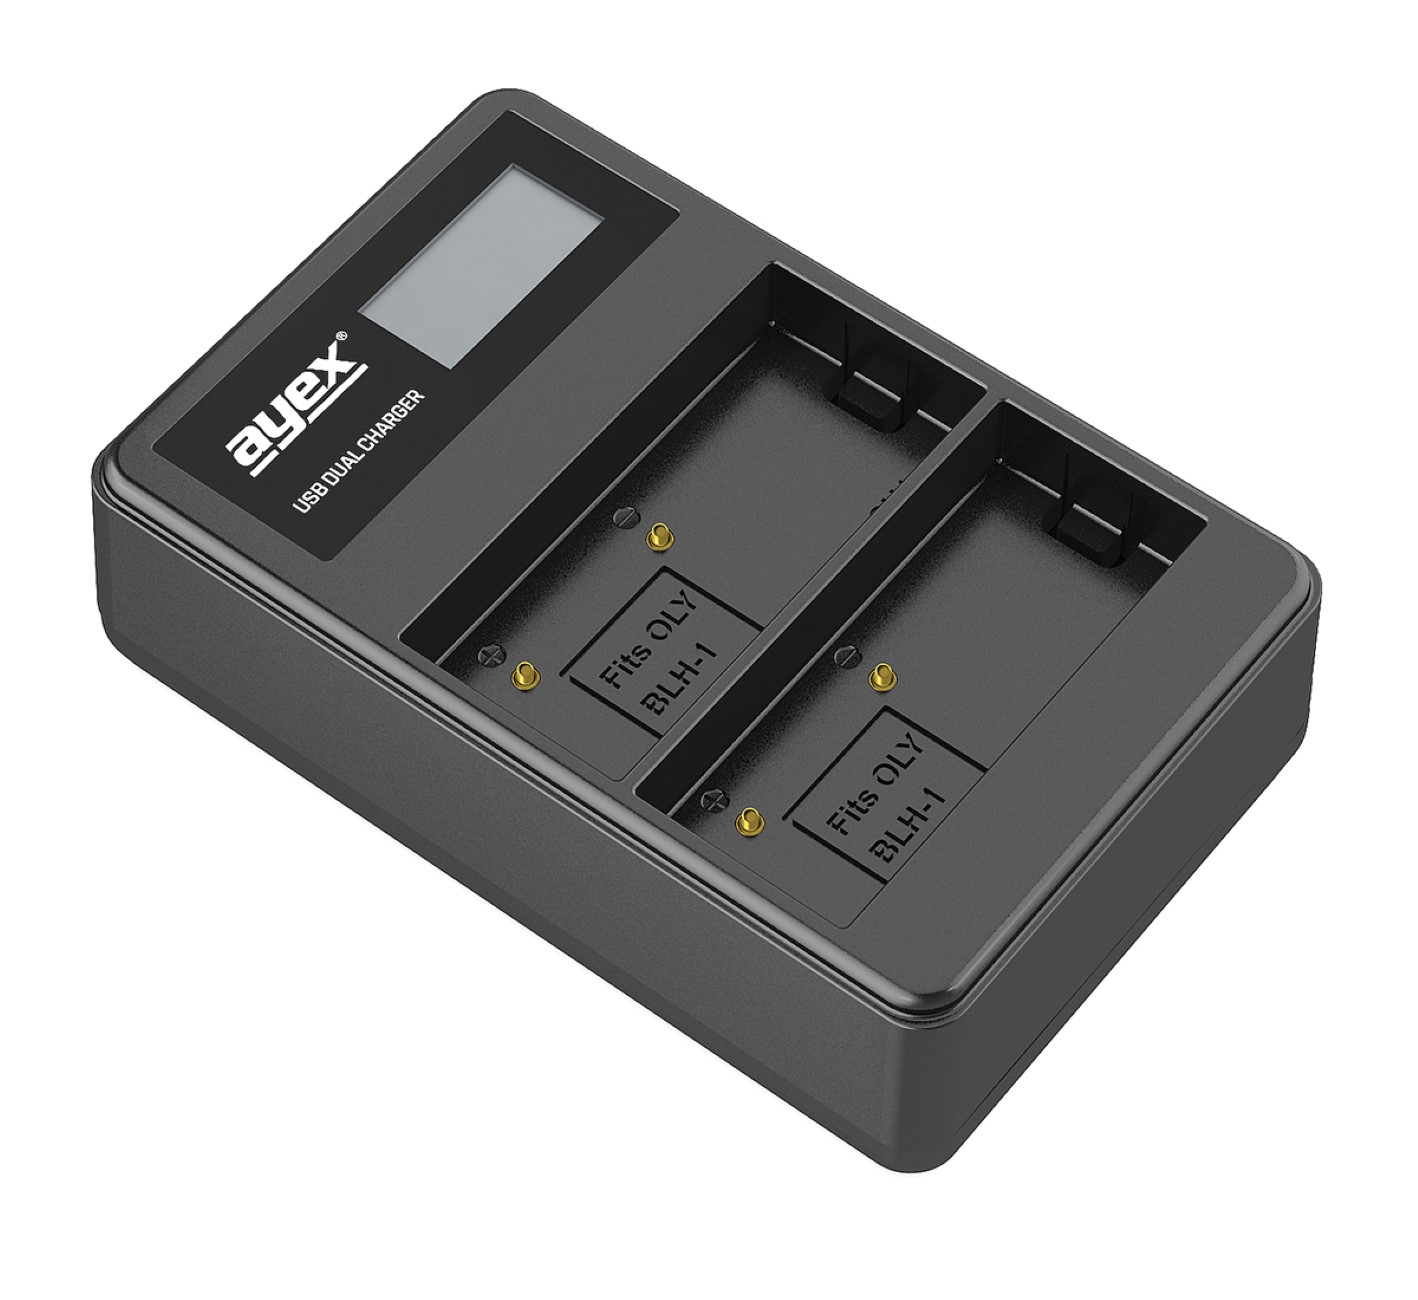 ayex USB Dual Ladegerät für Olympus BLH-1 Akkus